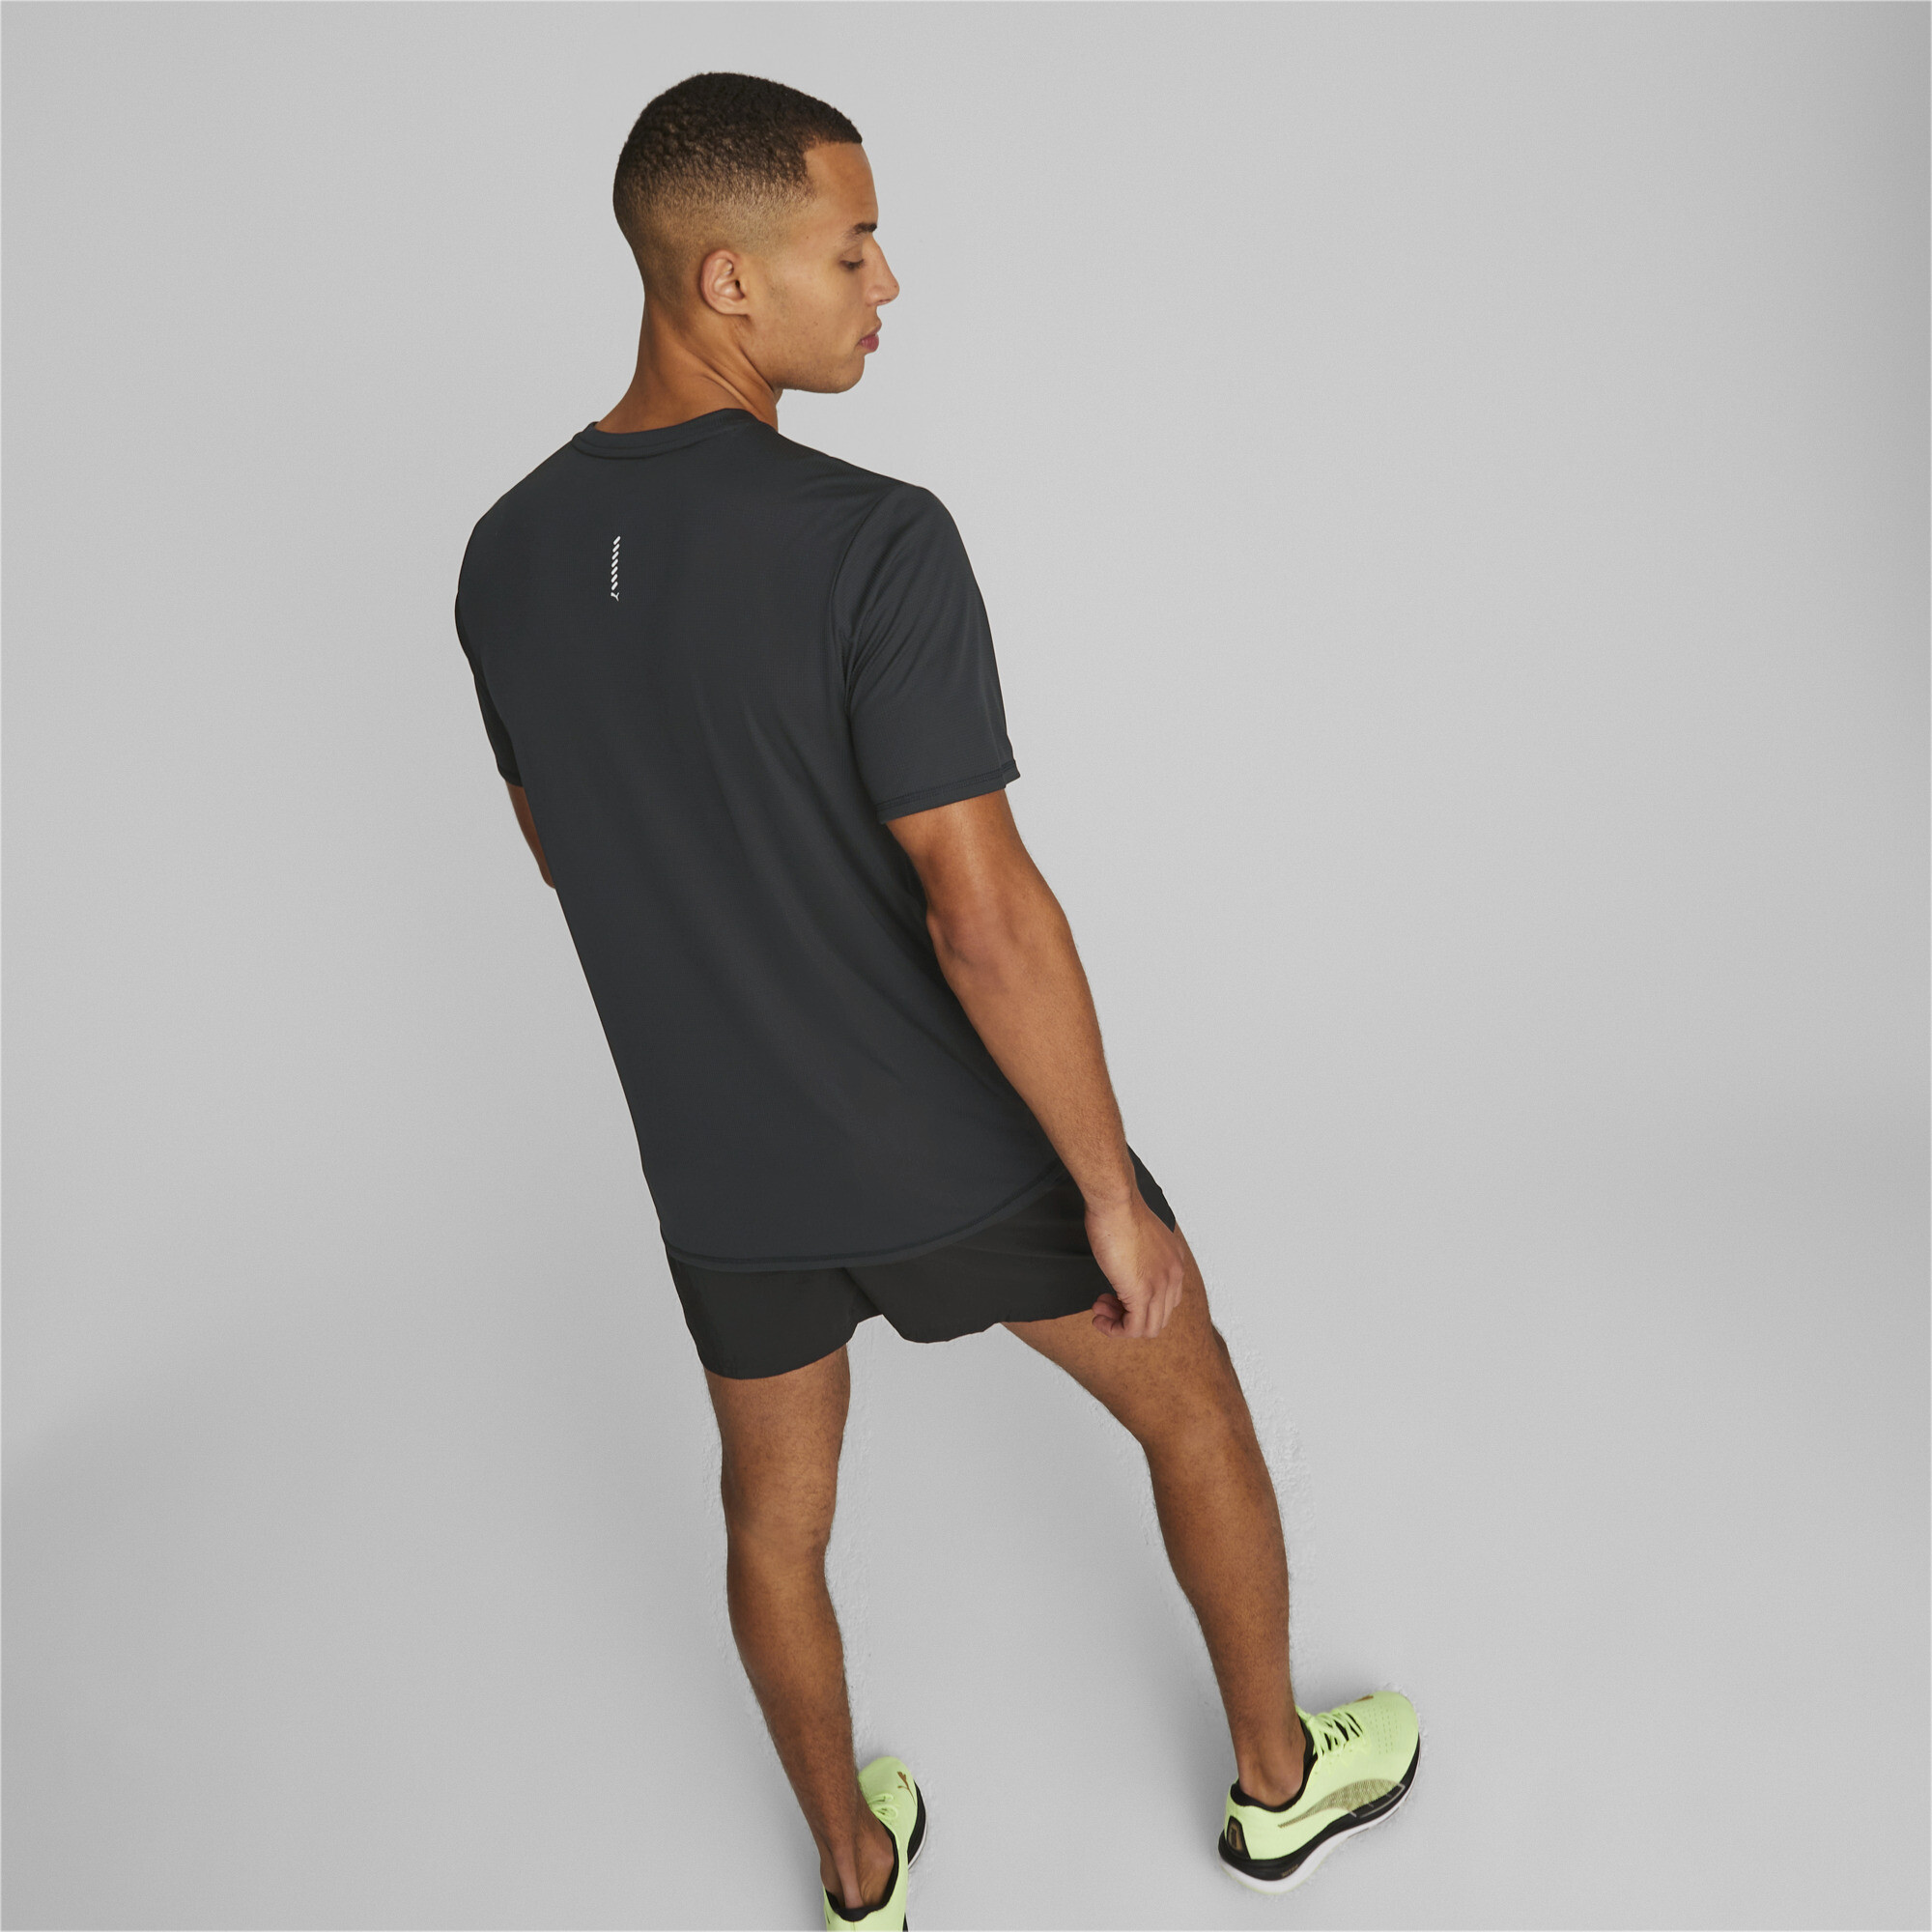 Men's PUMA RUN FAVOURITE Short Sleeve Graphic Running T-Shirt Men In Black, Size Small